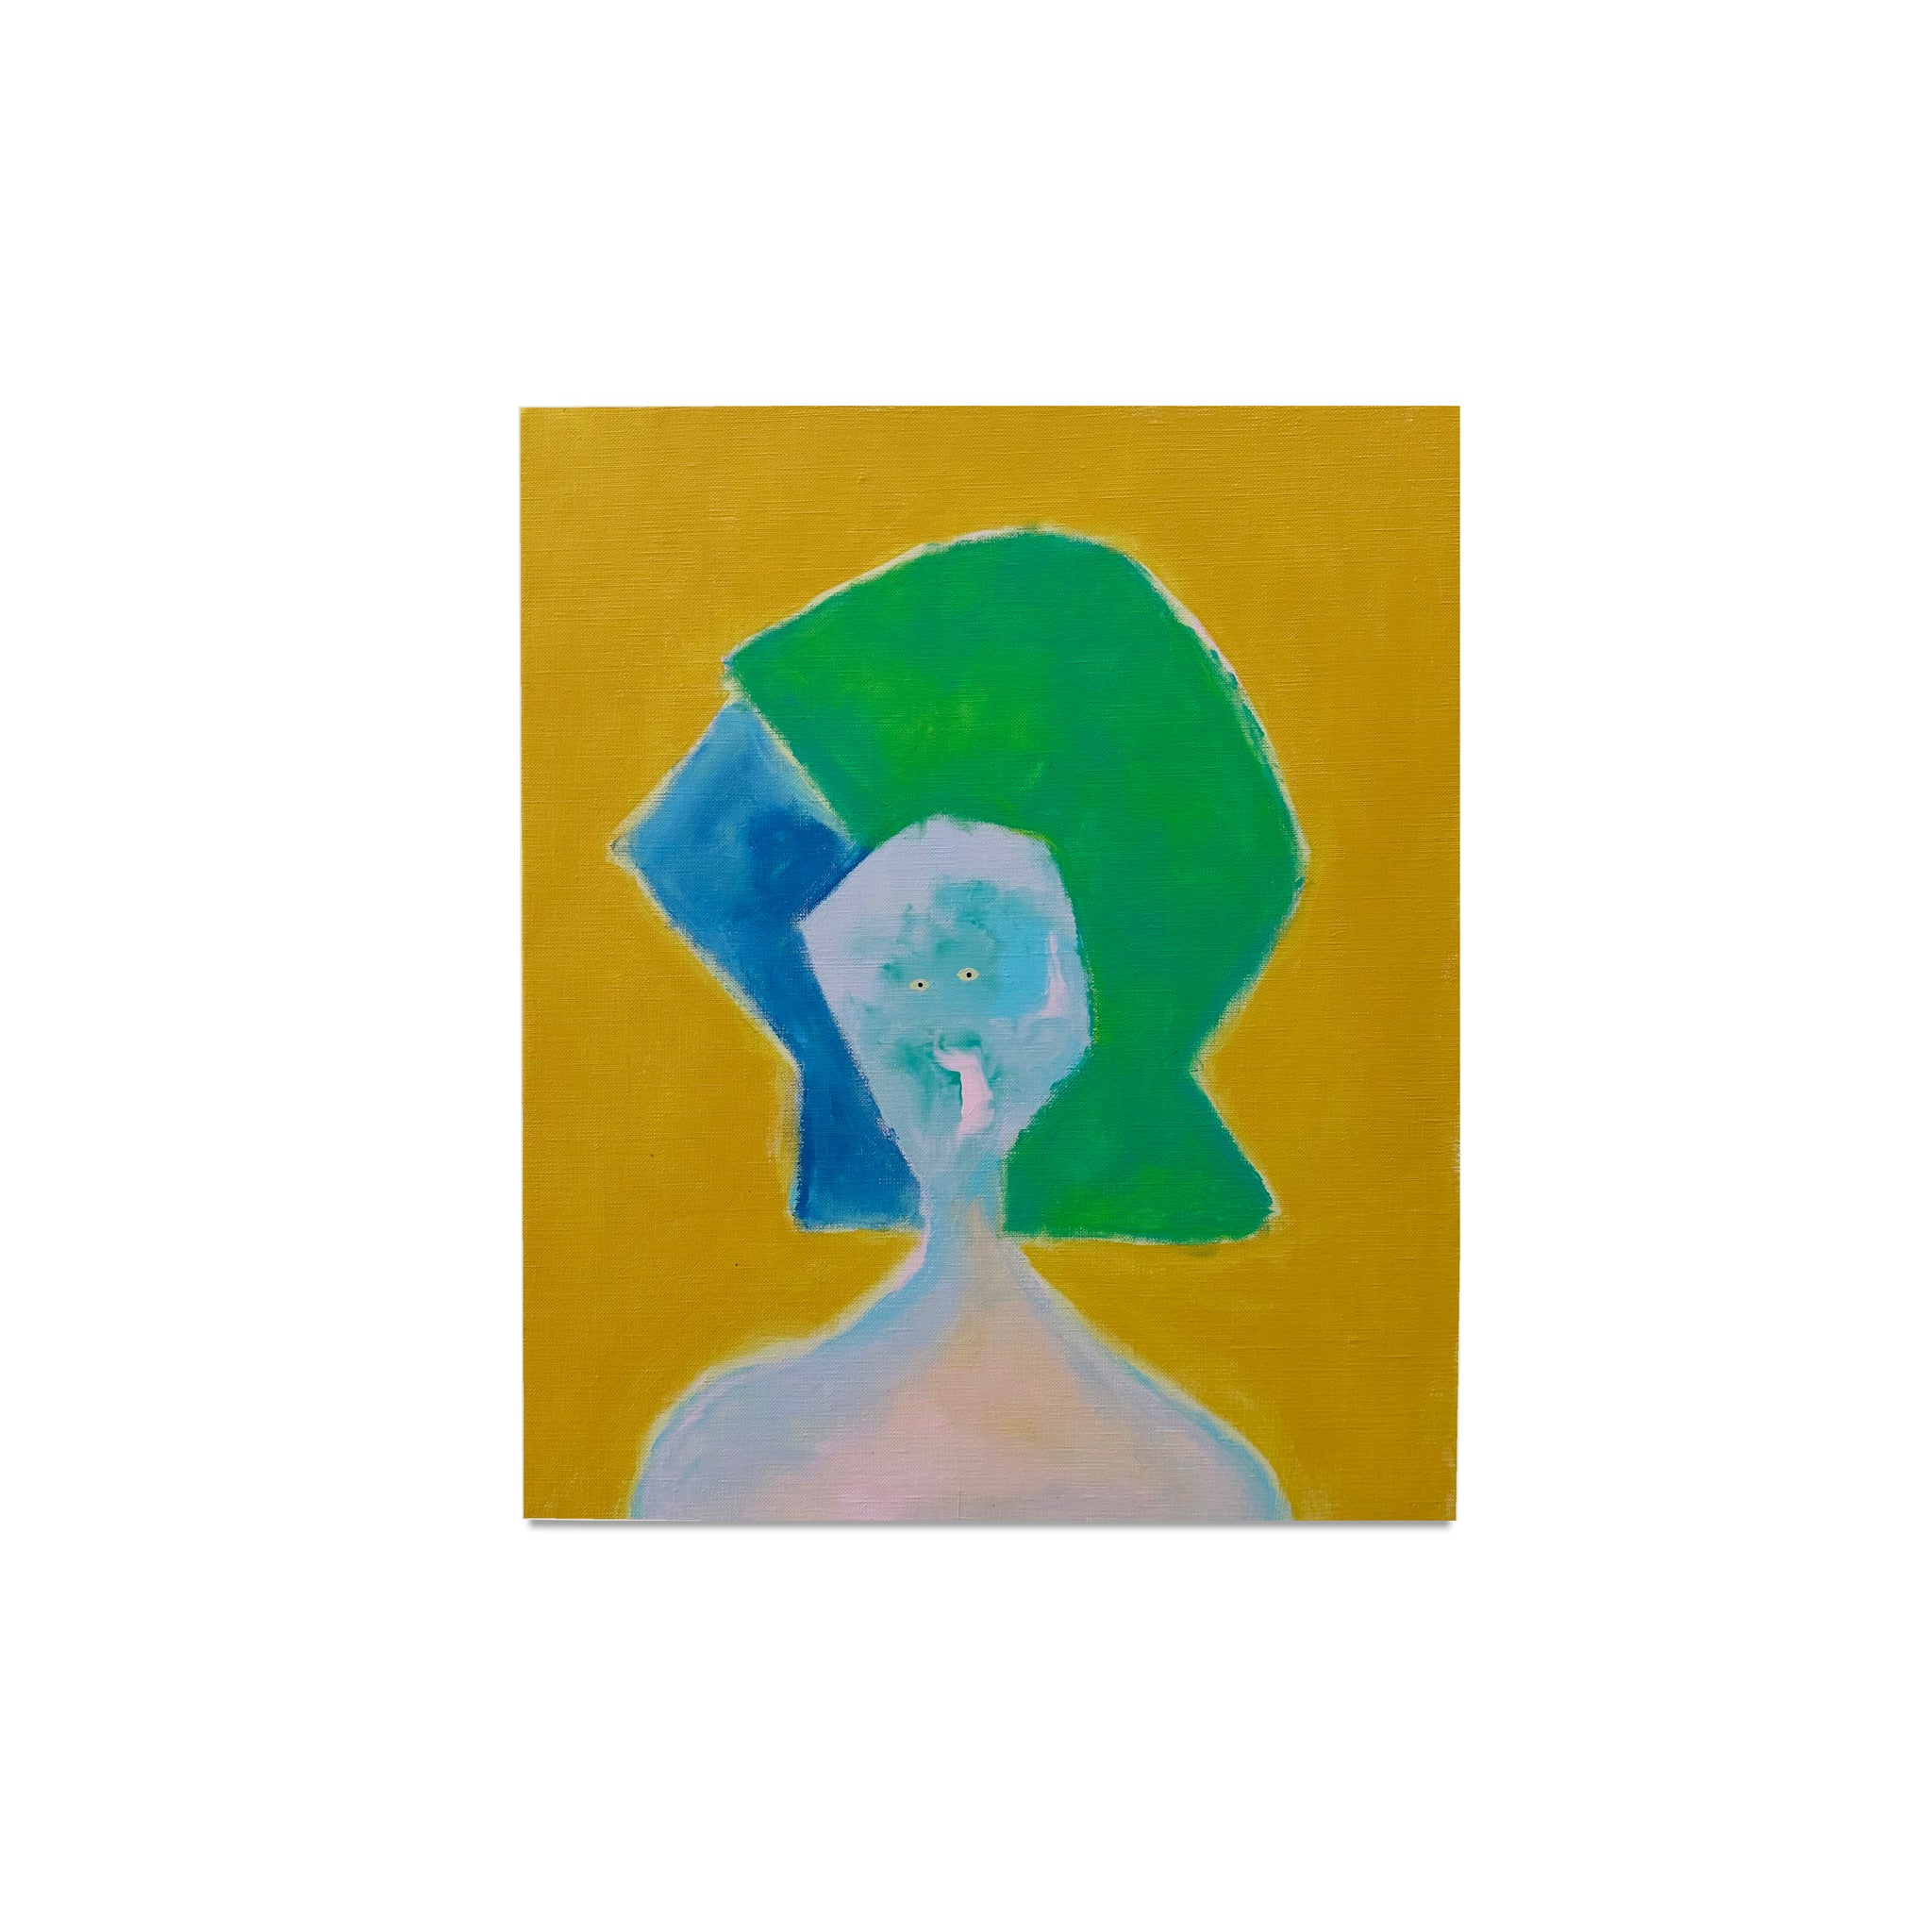 Joji Nakamura: Green and blue portrait